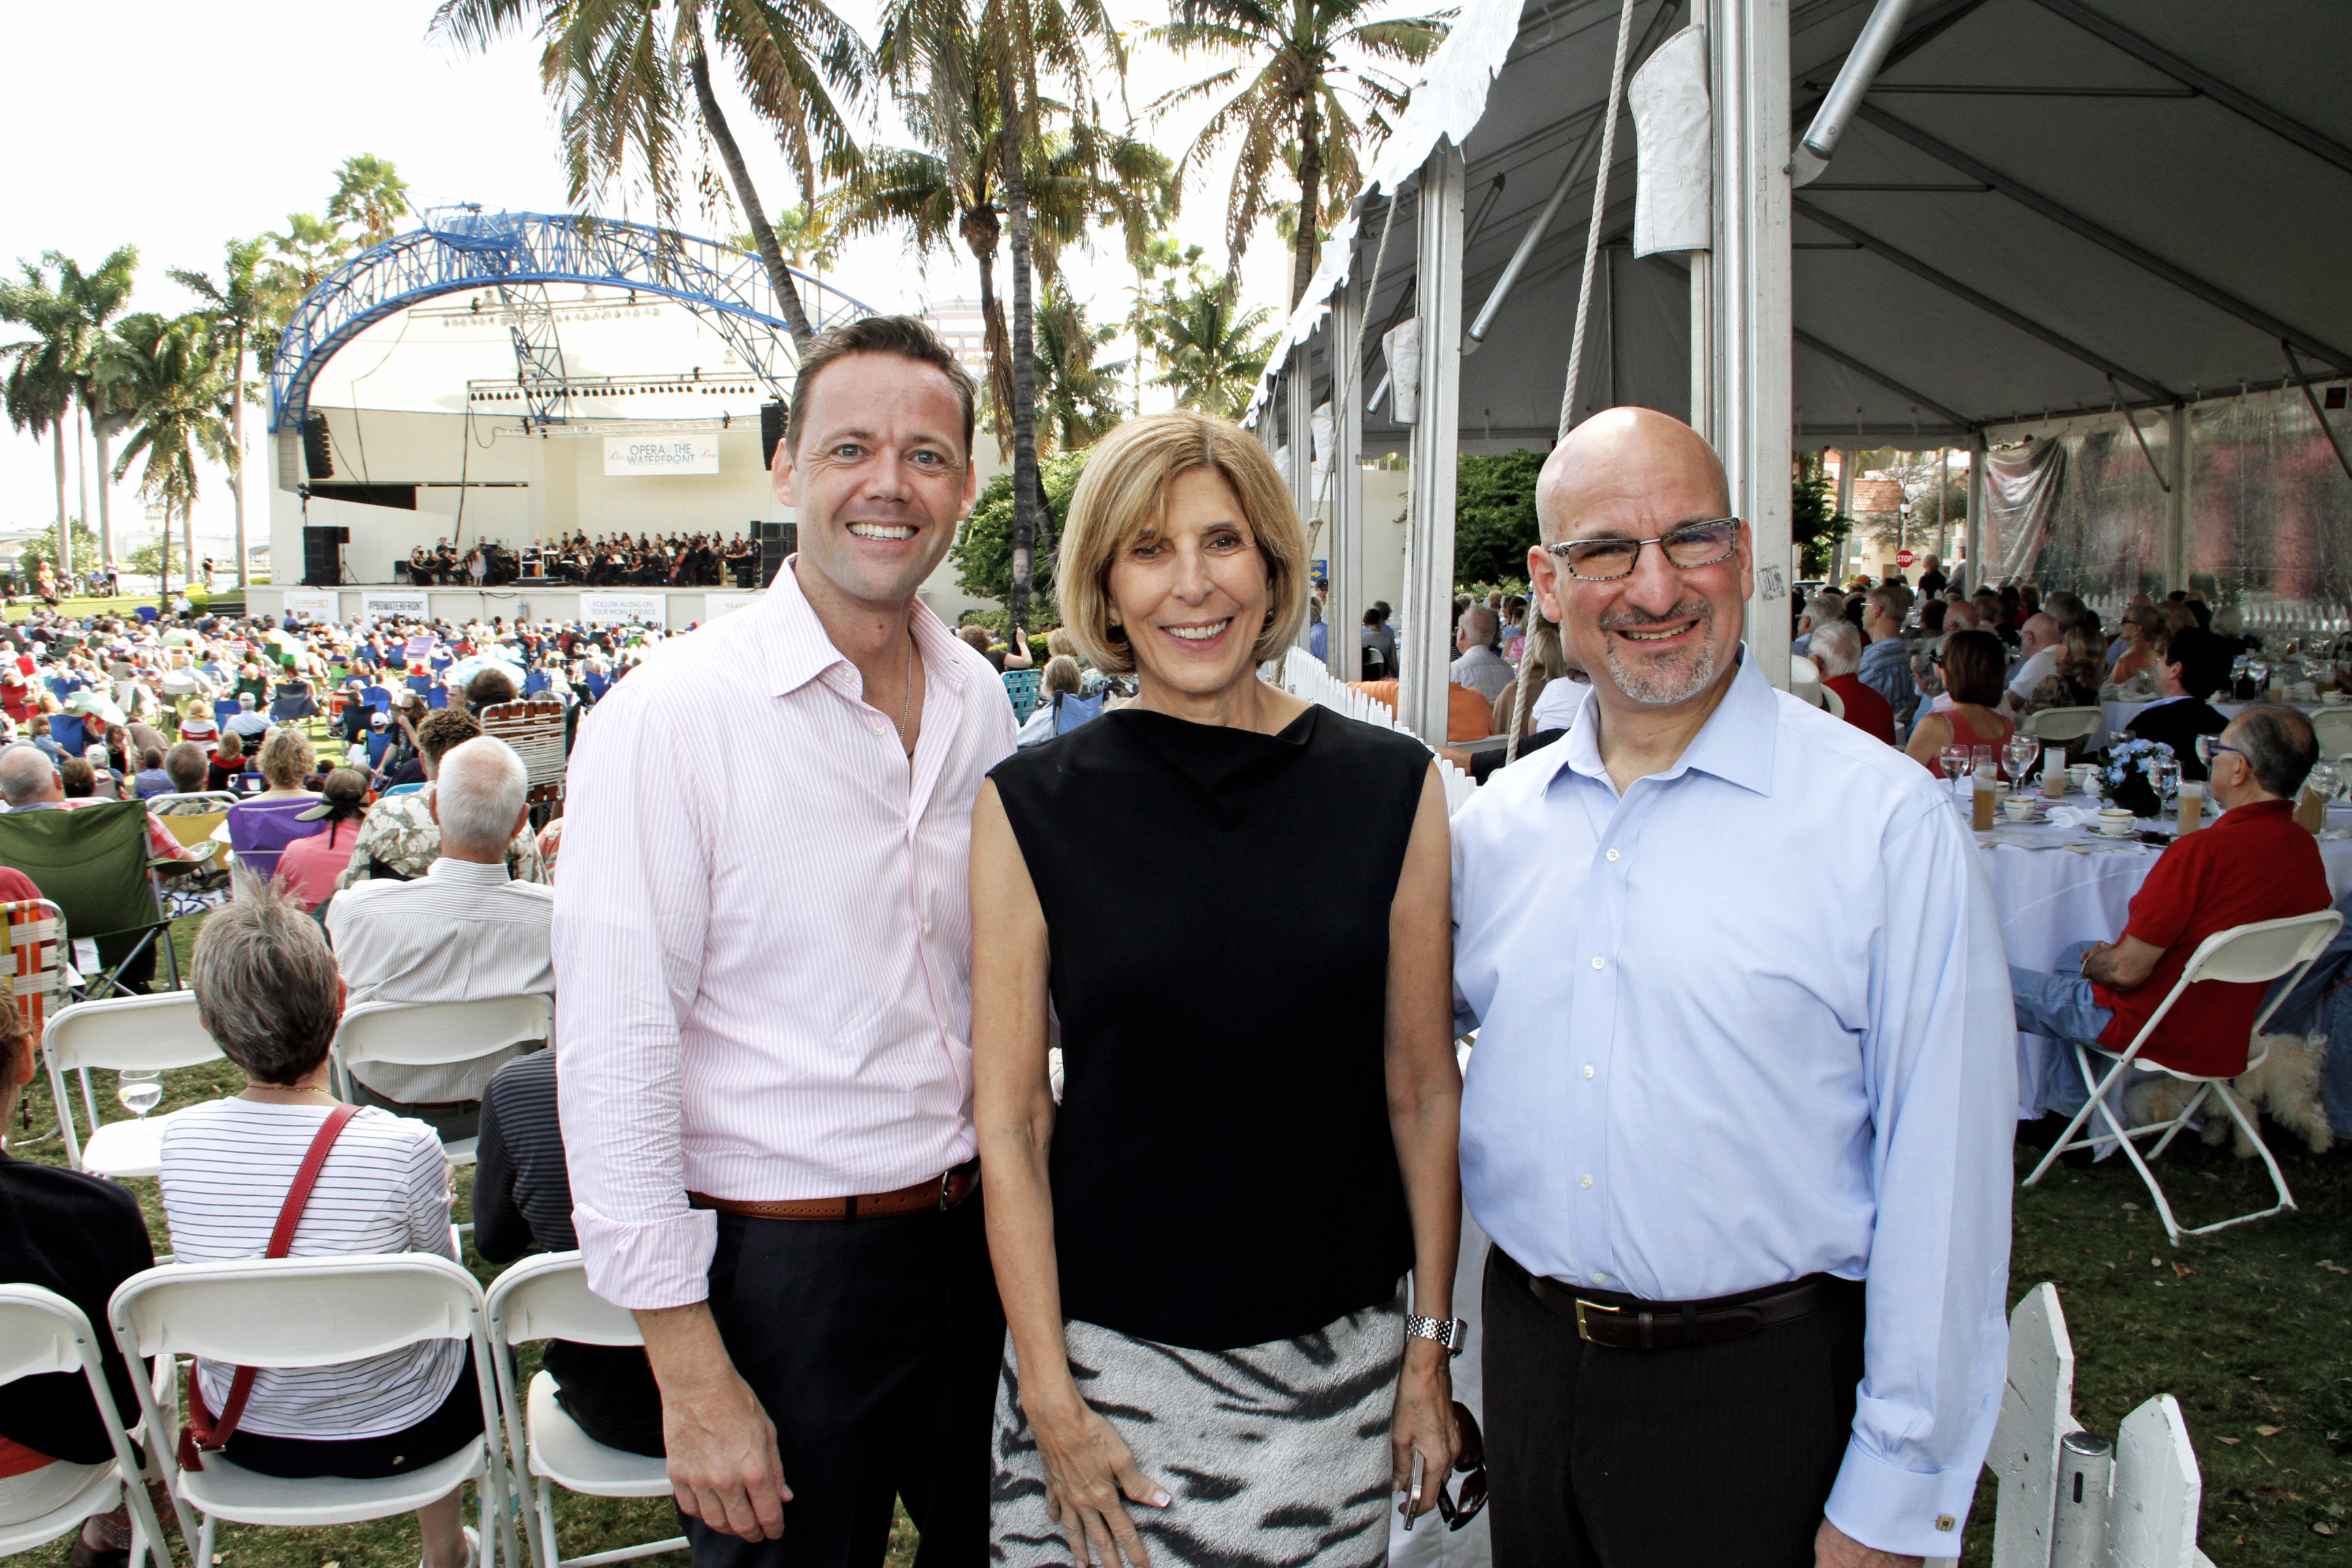 Daniel Biaggi With City of West Palm Beach Mayor Jeri Muoio and OPERA America President/CEO Marc A. Scorca